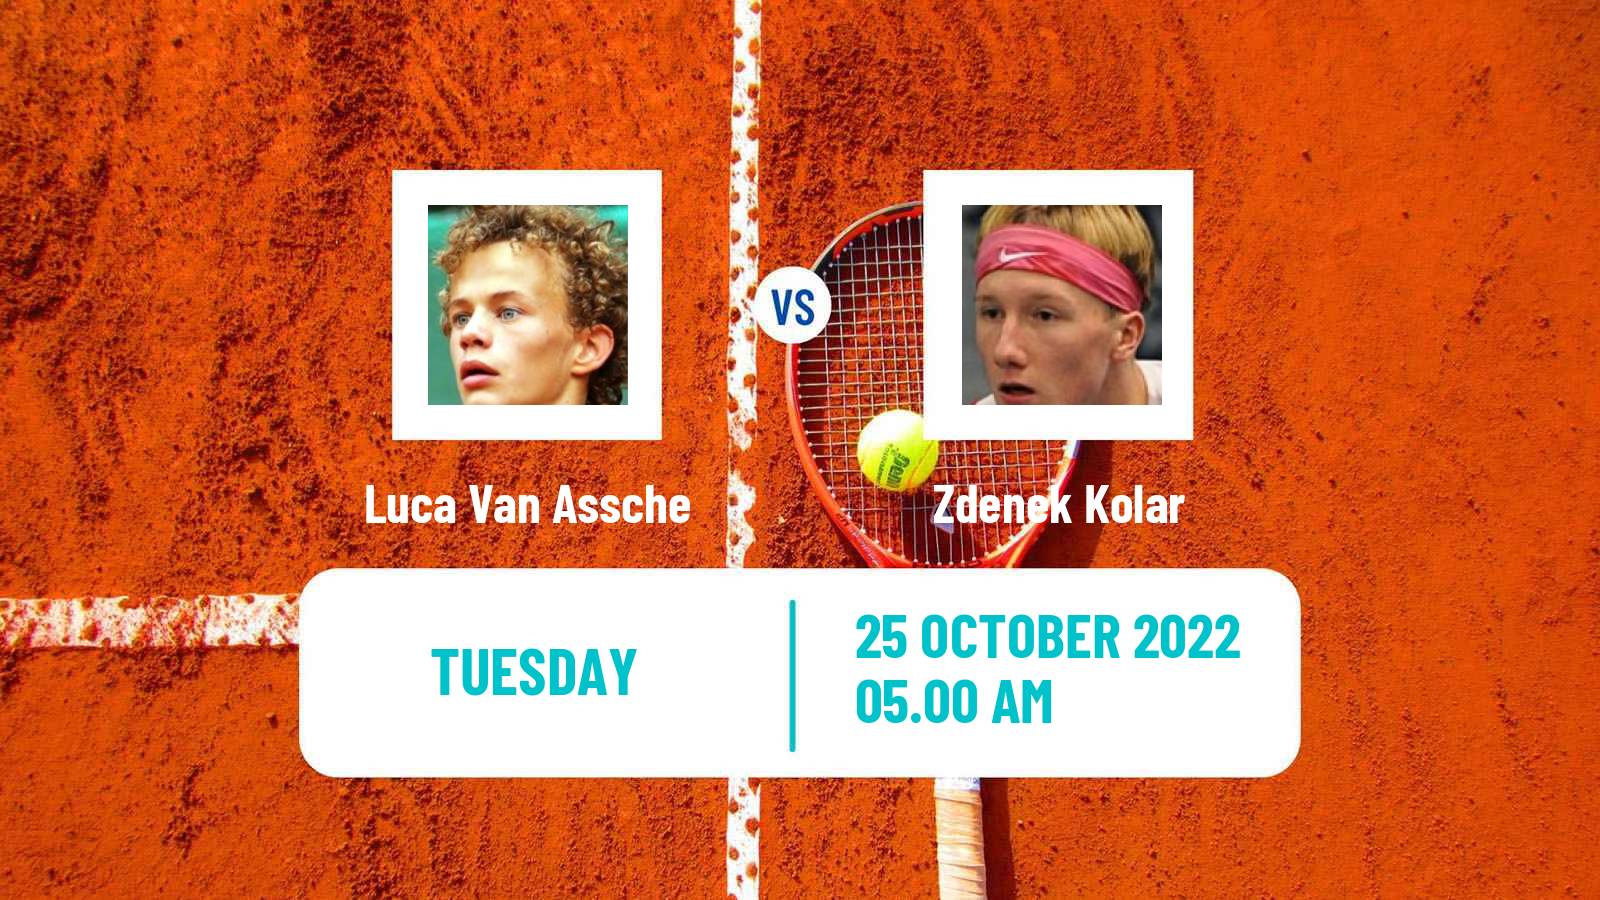 Tennis ATP Challenger Luca Van Assche - Zdenek Kolar